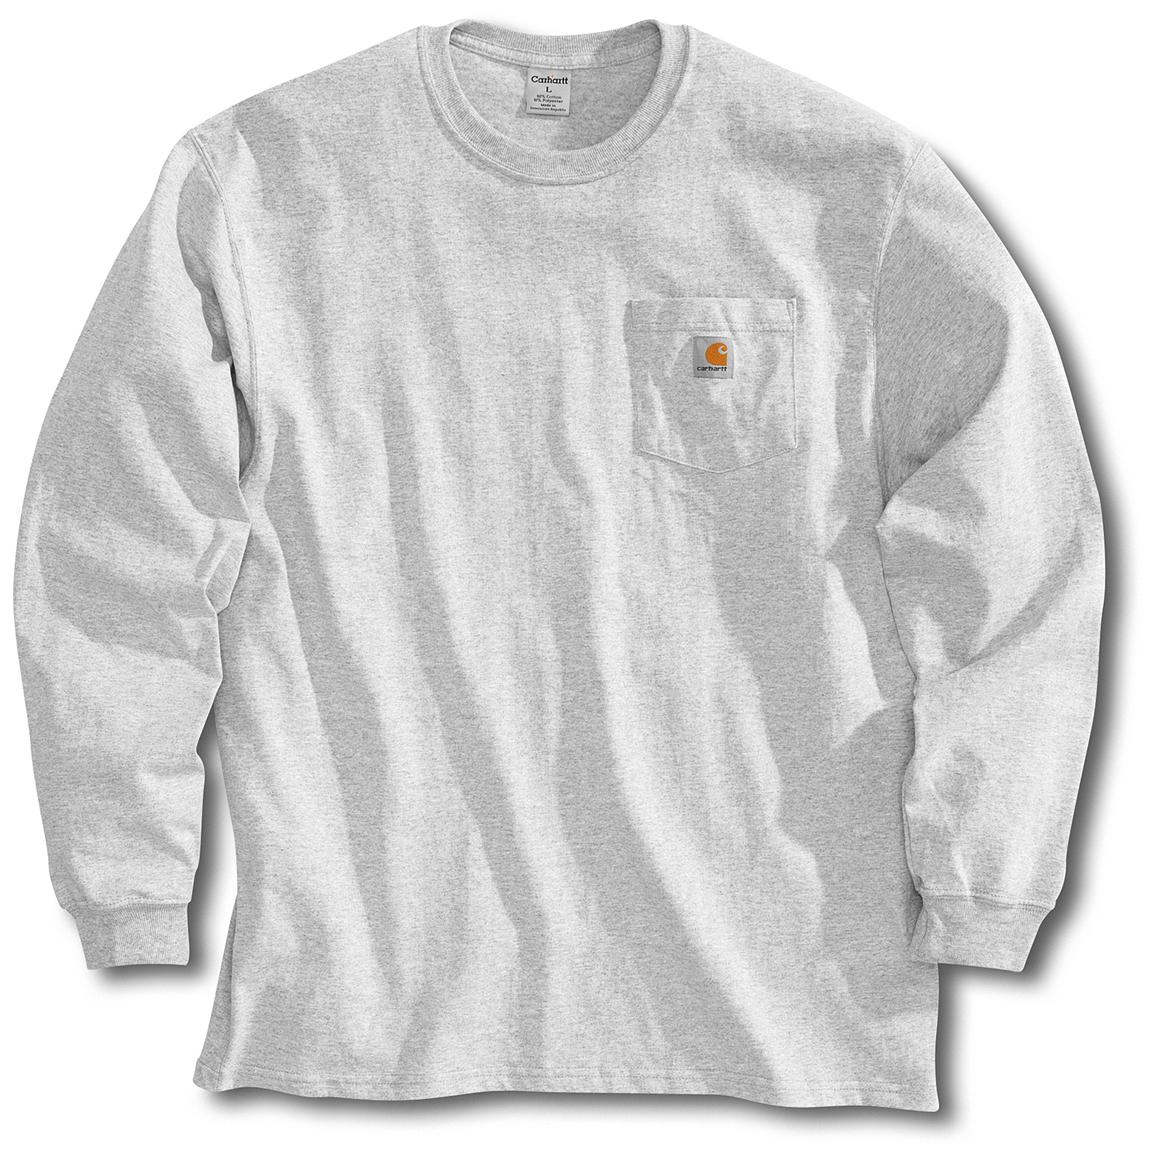 Men's Carhartt Workwear Long-Sleeve Pocket T-Shirt - 215678, T-Shirts ...